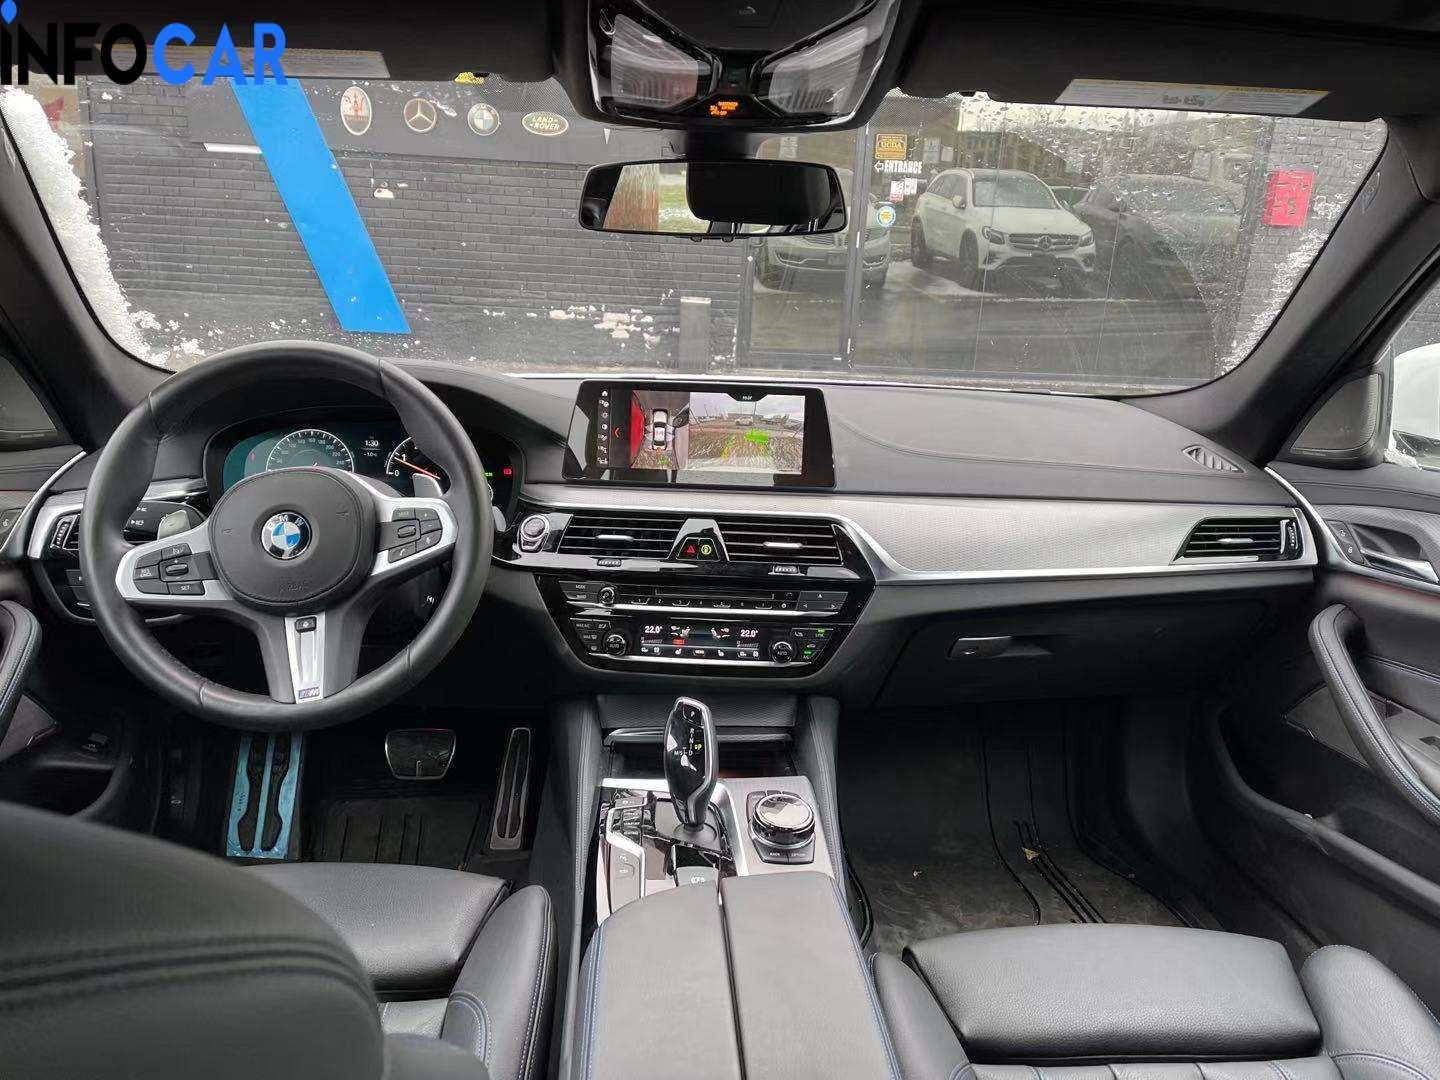 2019 BMW 5-Series 540 xDrive - INFOCAR - Toronto Auto Trading Platform